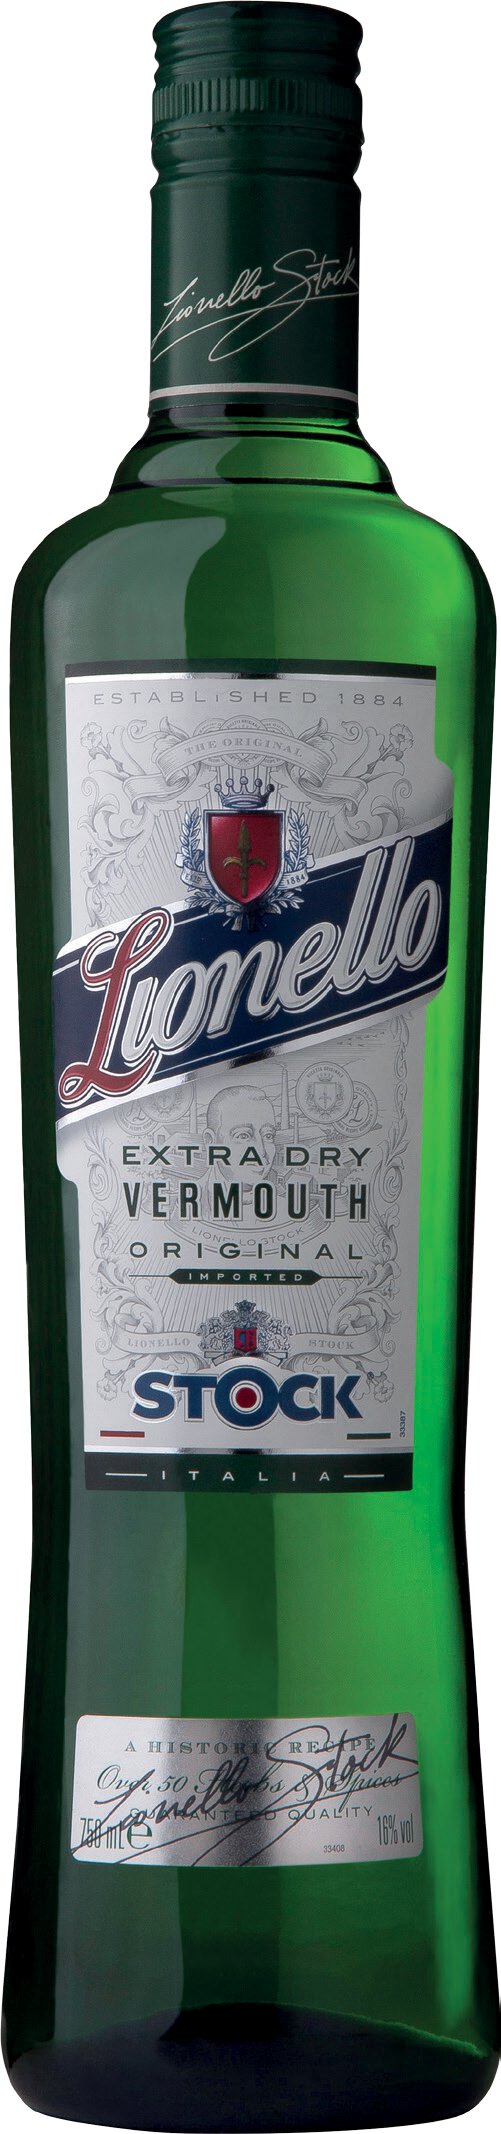 Stock Lionello Extra Dry Vermouth 750ml